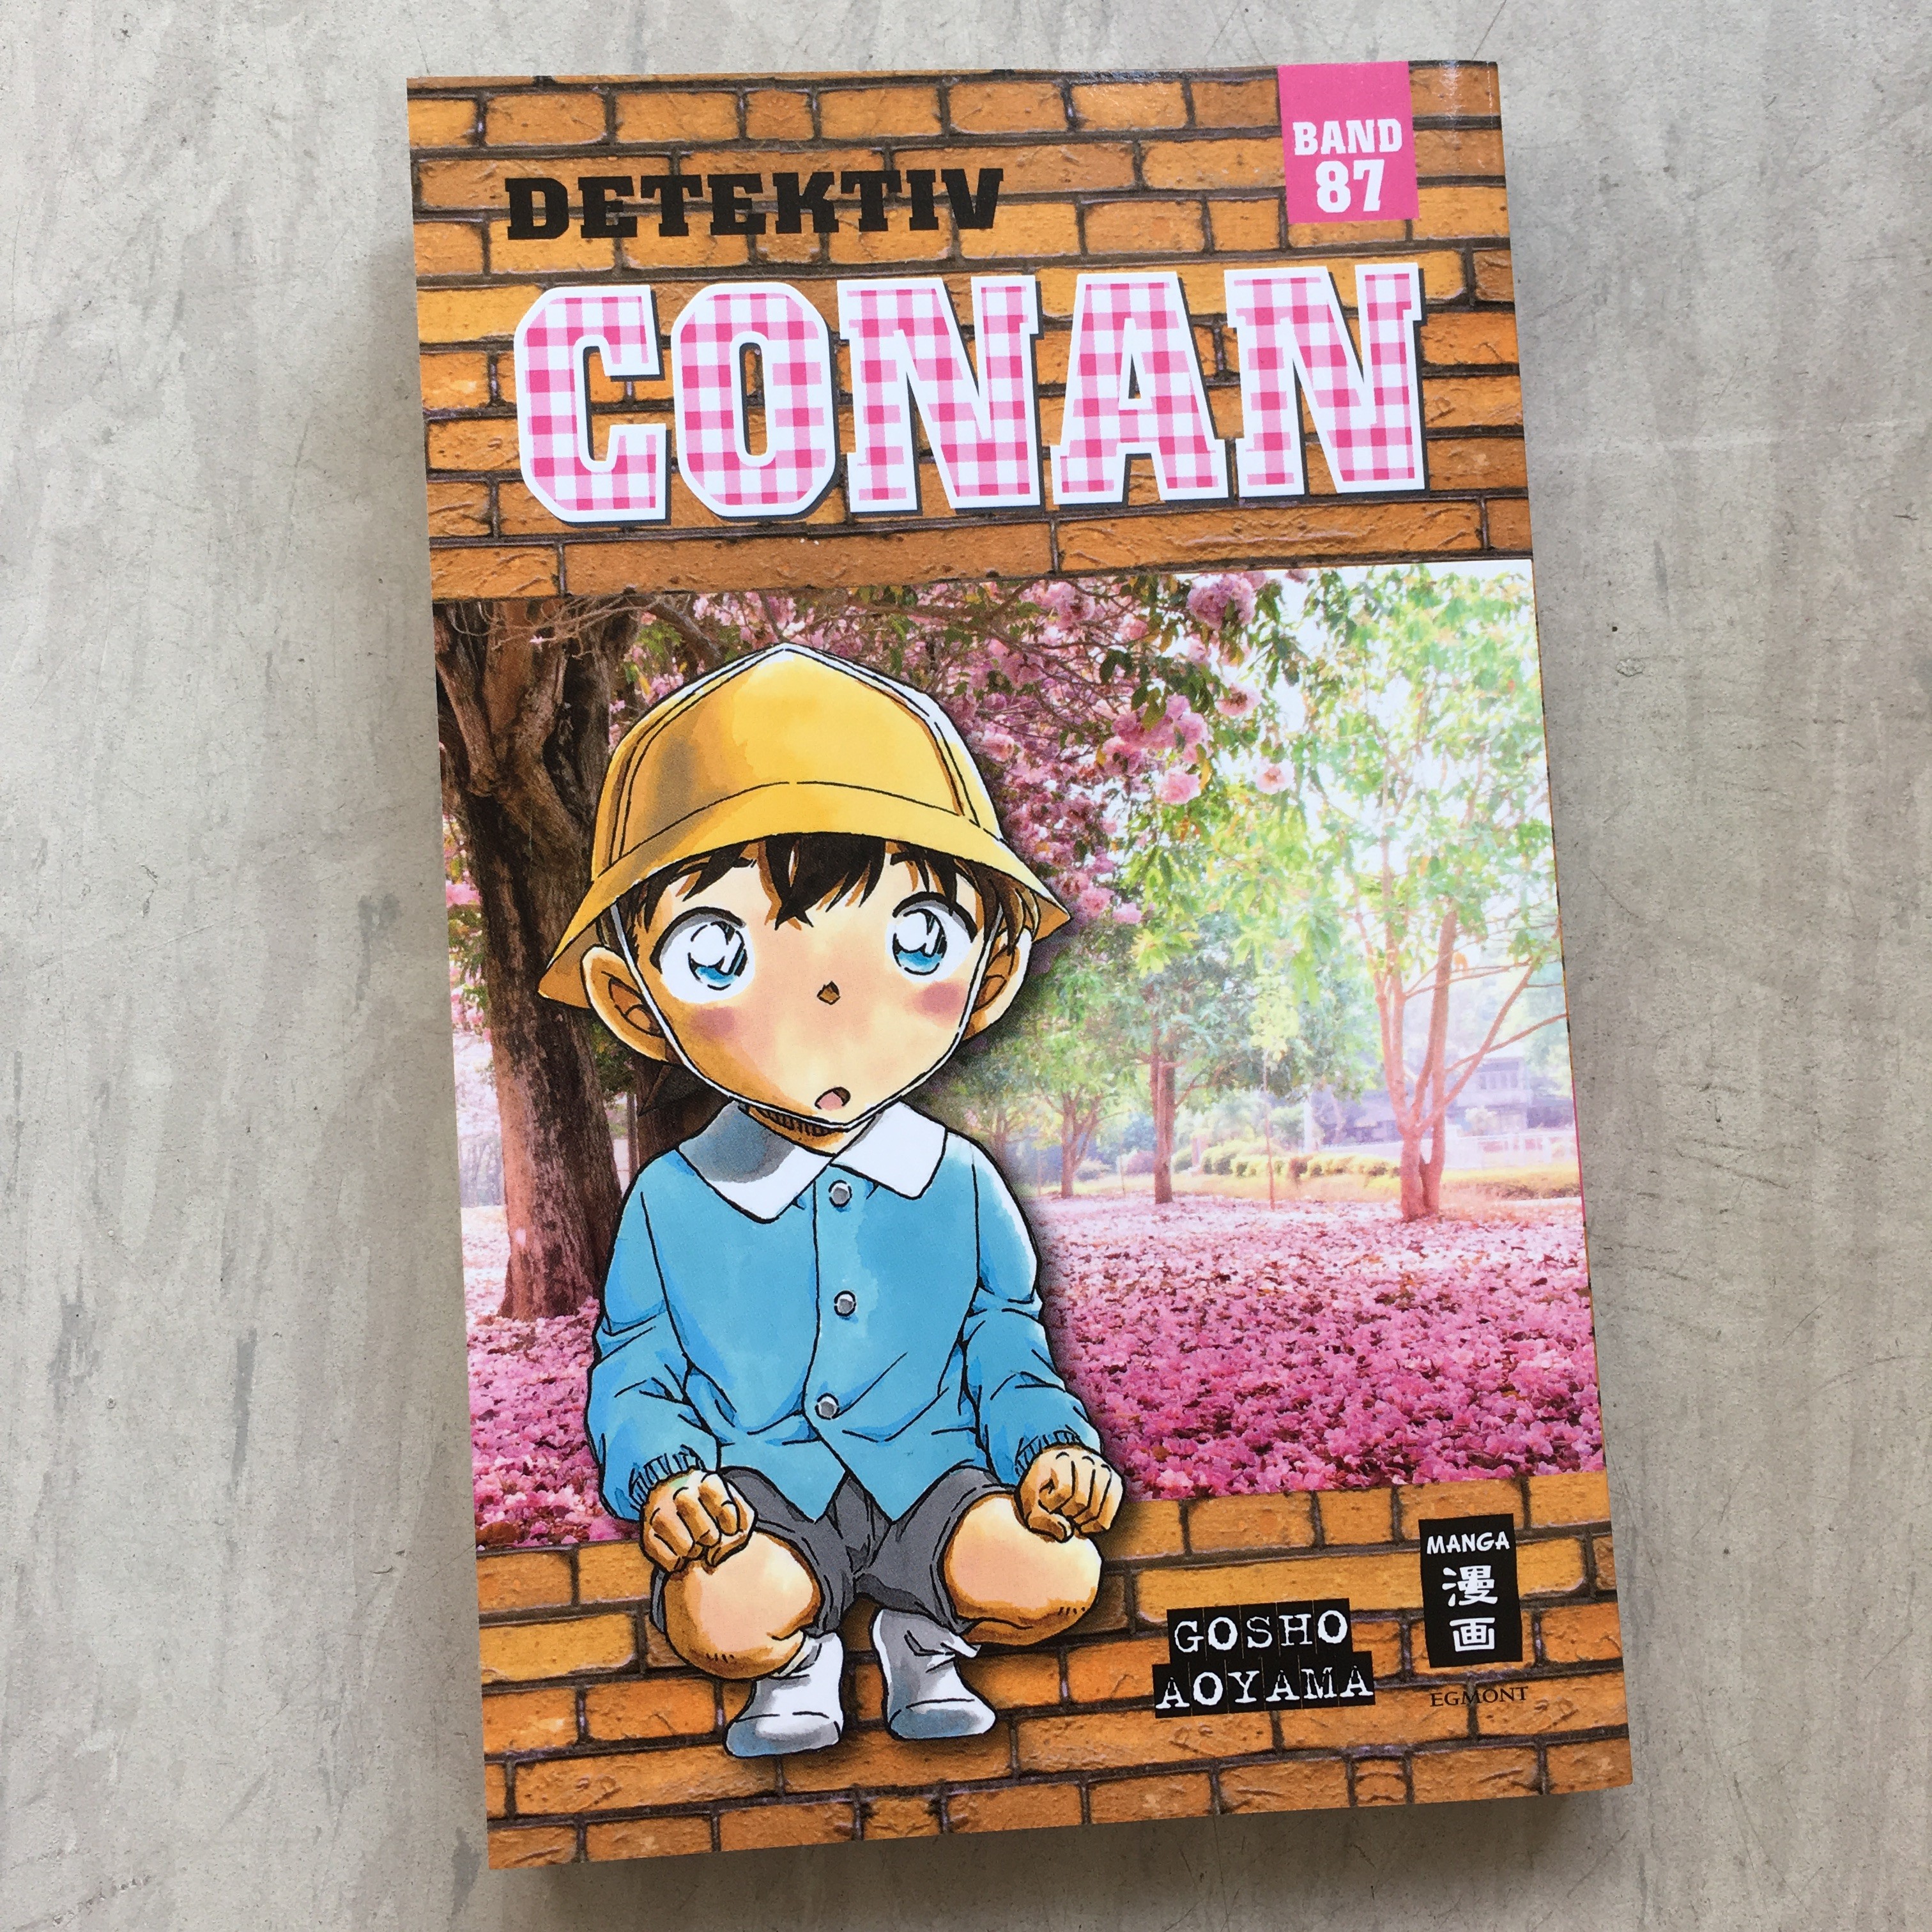 Detektiv Conan Band 87